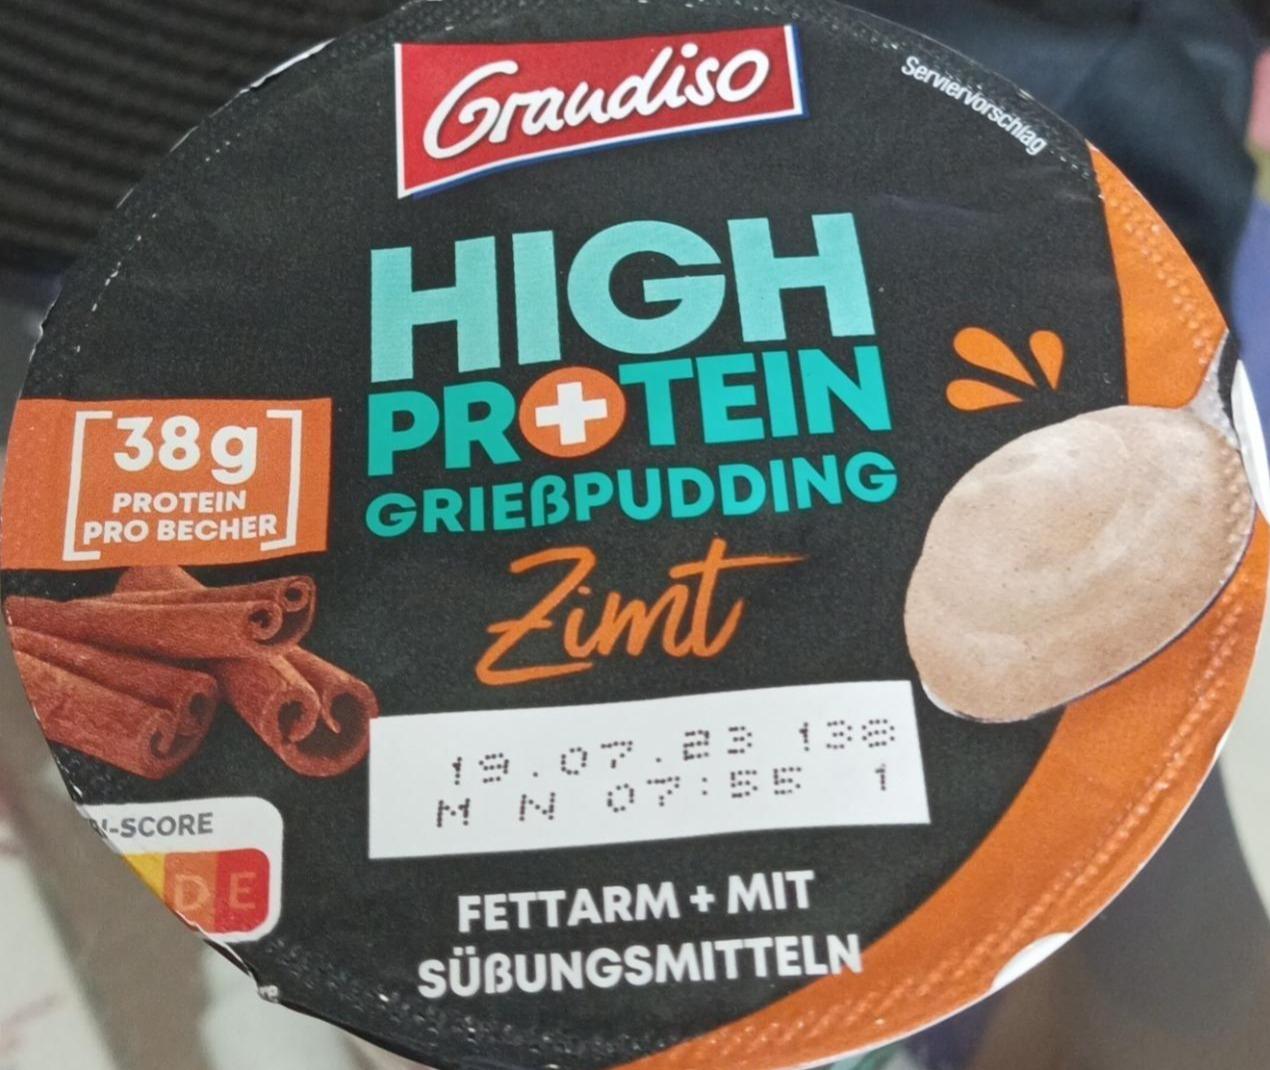 Zdjęcia - High protein Griesspudding Graudiso